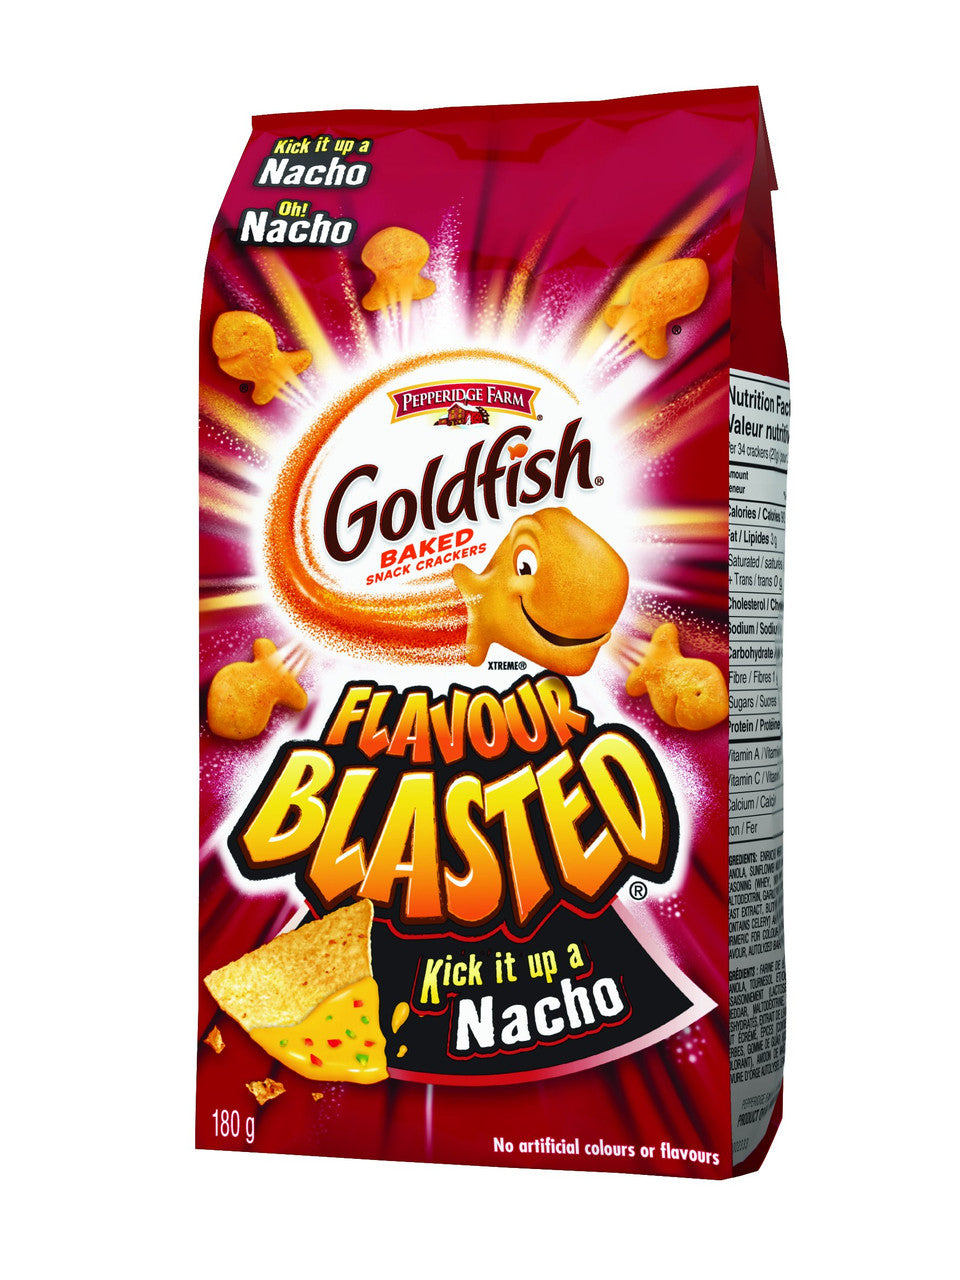 Pepperidge Farm, Goldfish, Flavour Blasted Baked Nacho Crackers, 180g/6.3oz (Imported from Canada)